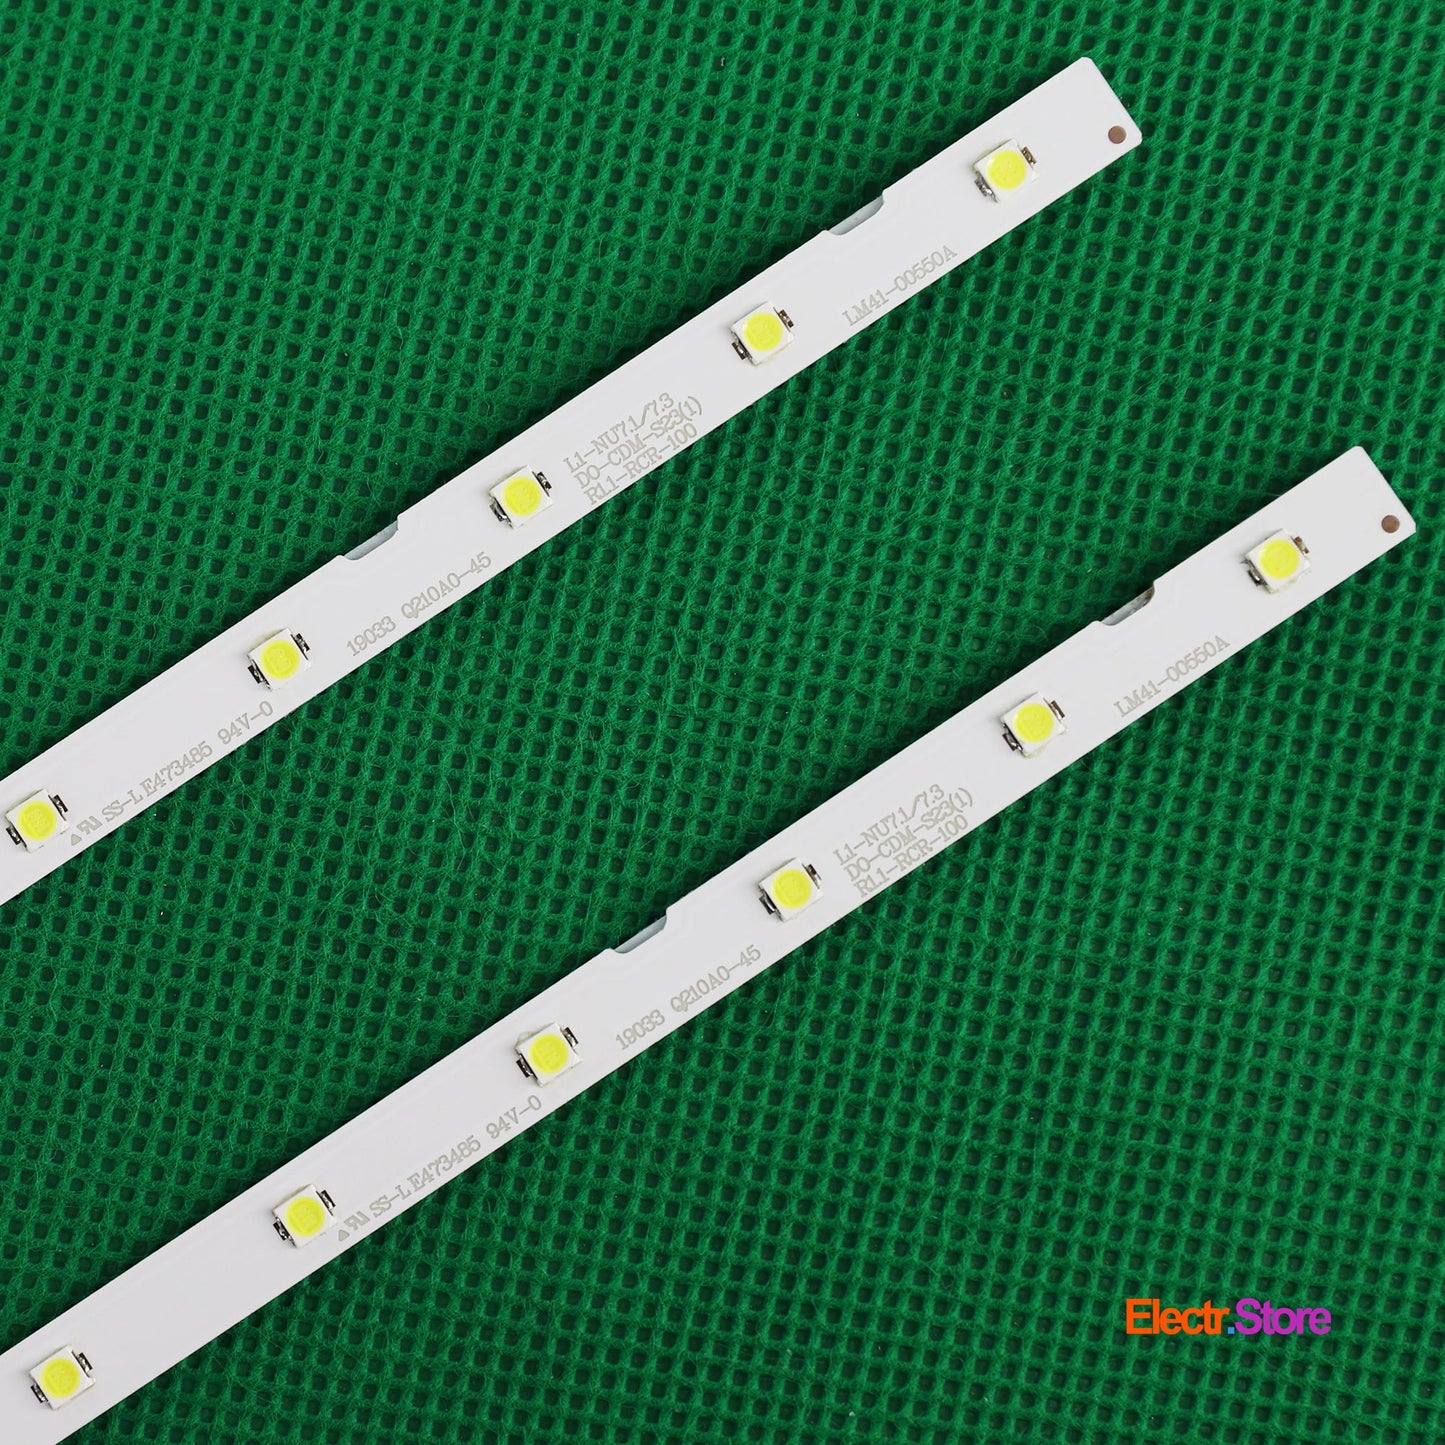 LED Backlight Strip Kits, AOT_40_NU7100F, LM41-00550A, LM41-00549A, BN96-45955A, 2X23LED (2 pcs/kit), for TV 40" PANEL: CY-NN040HGLV3V 40" LED Backlights LM41-00550A Samsung Electr.Store